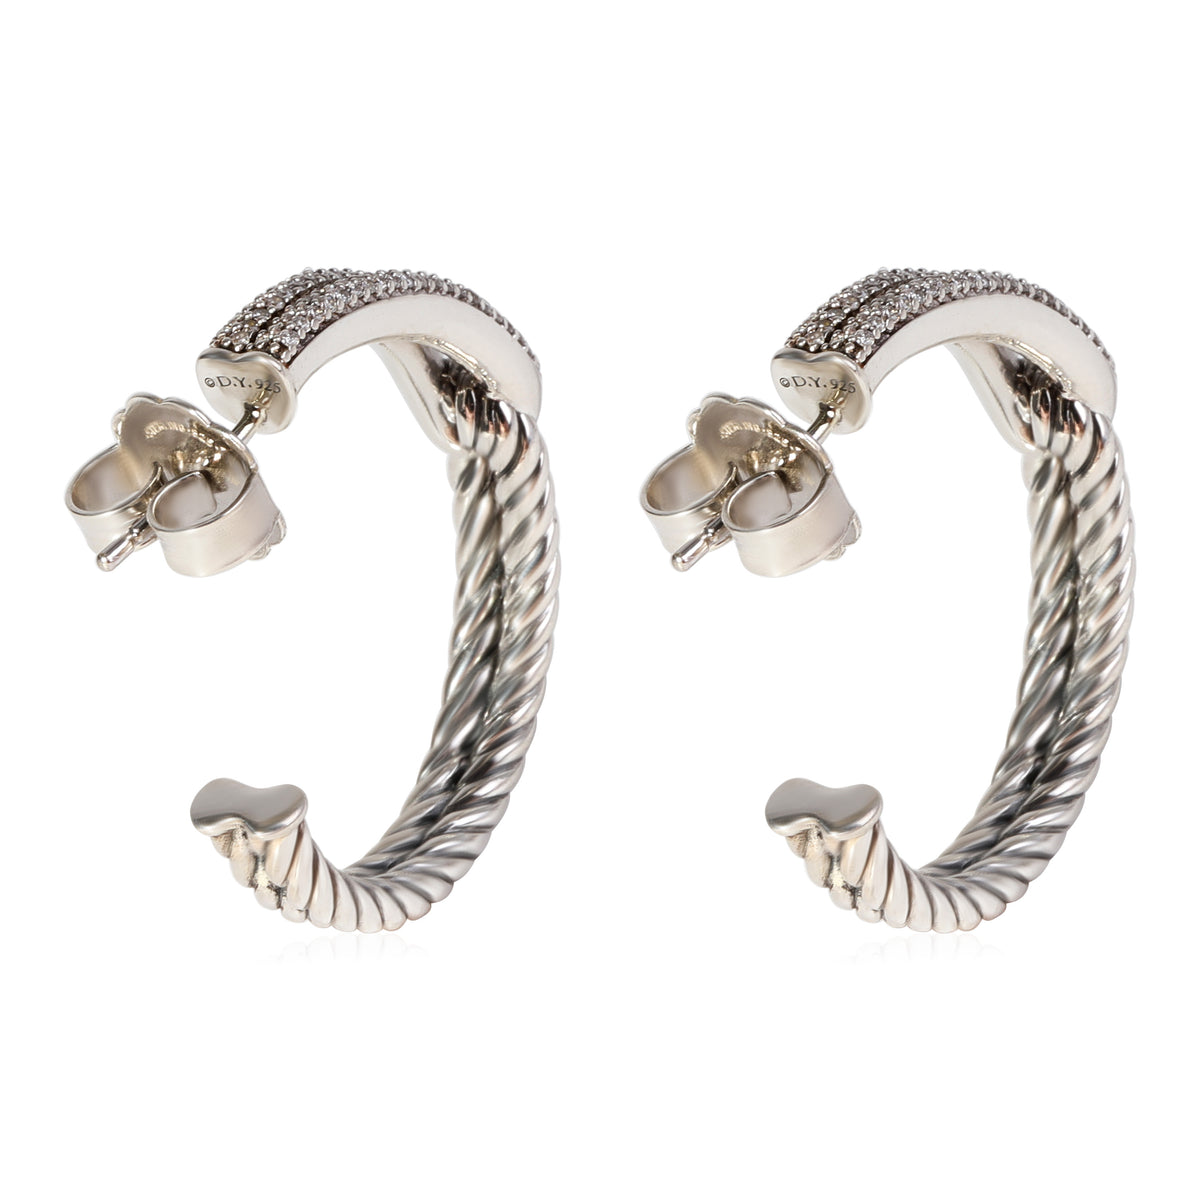 David Yurman Single Loop Labyrinth Diamond Earrings in Sterling Silver 0.43 CTW